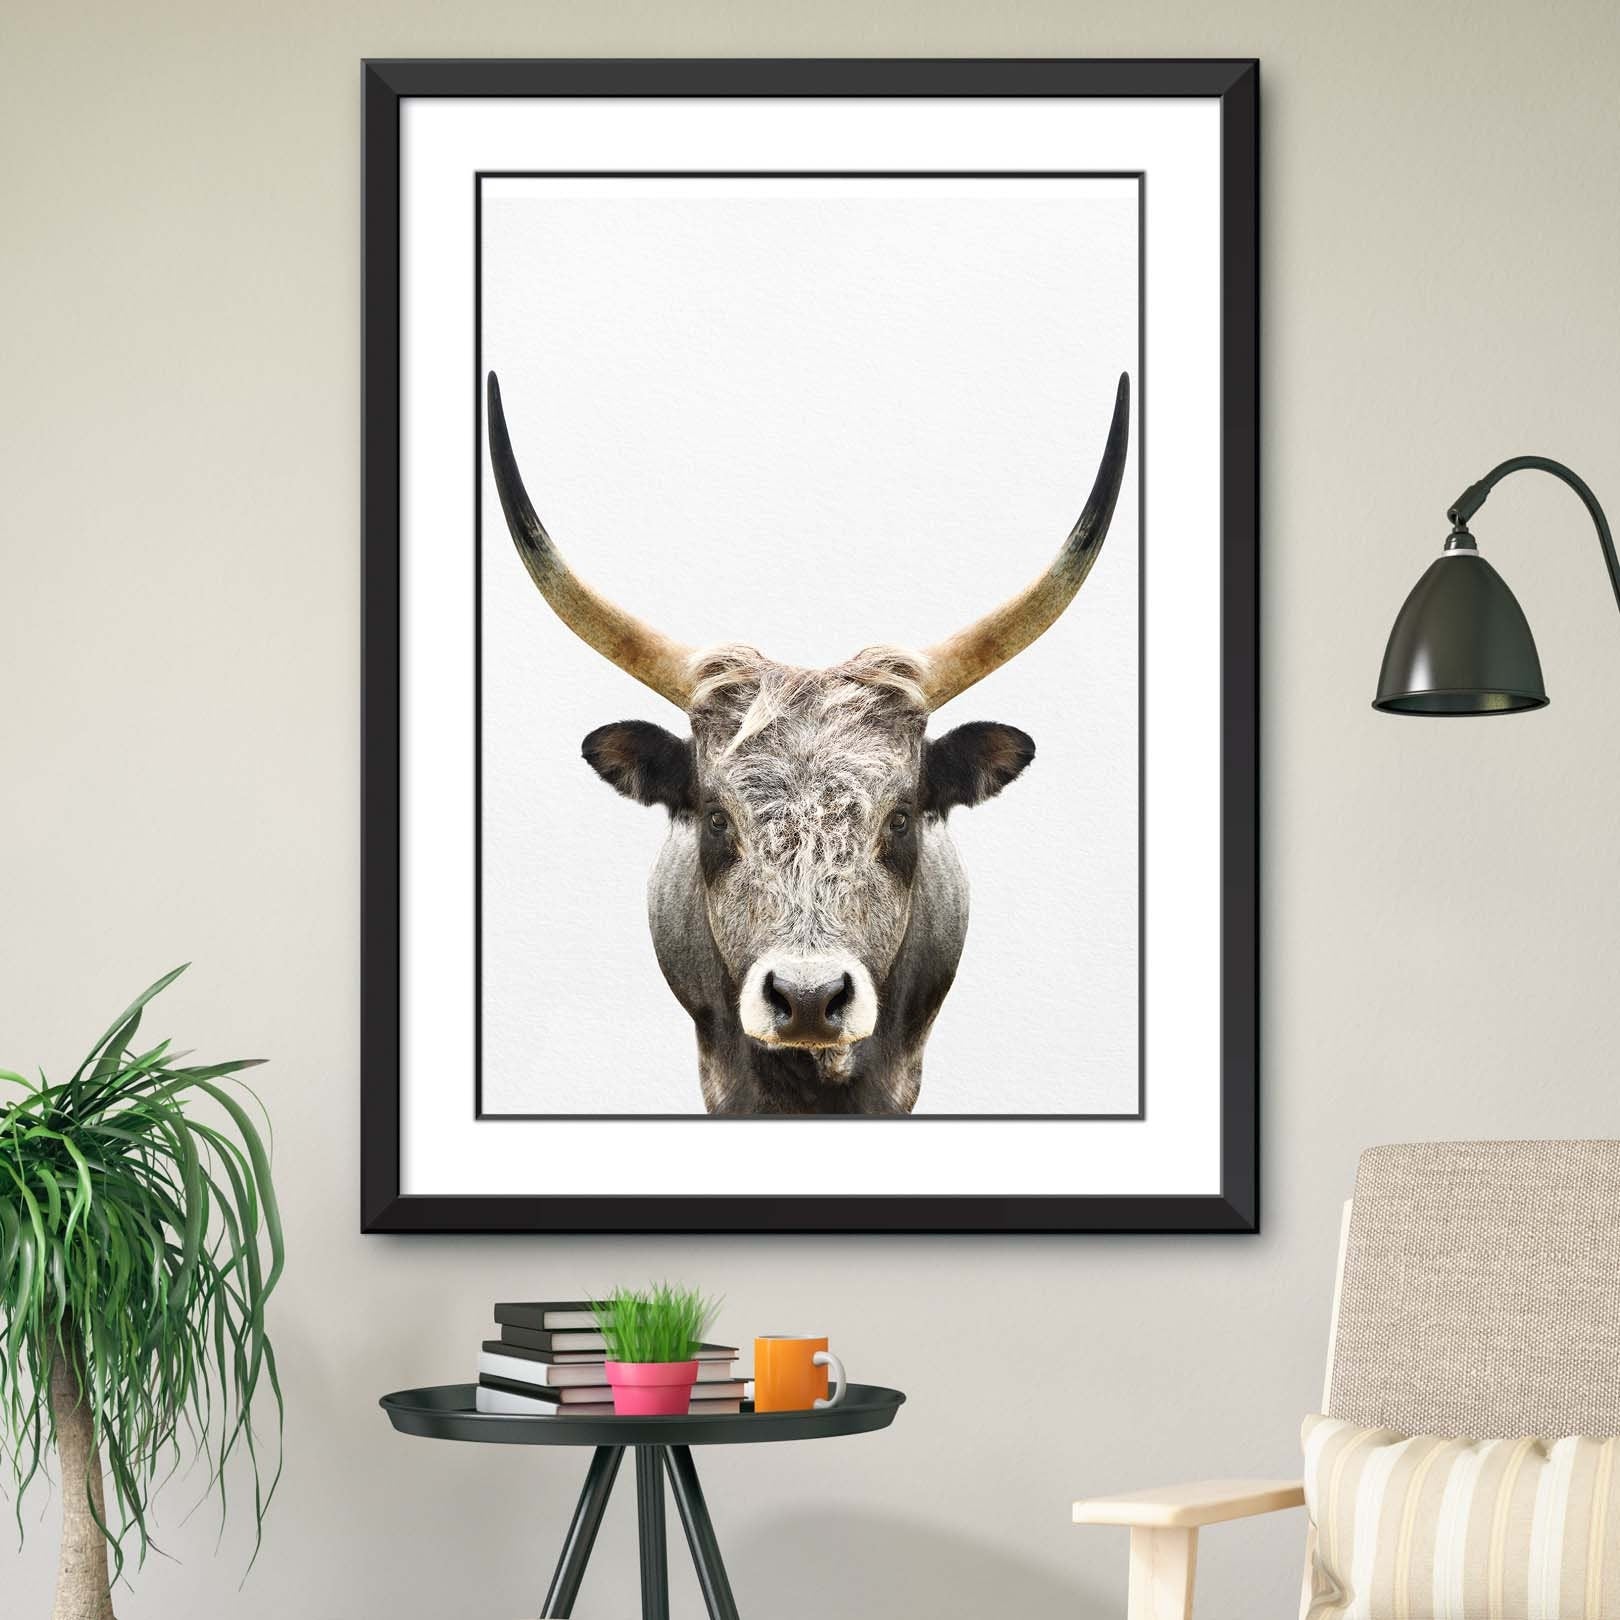 Cow Print, Cow Wall Art, Cow Decor, Living Room Art, Farmhouse Wall Decor, Farmhouse Art, Cow Wall Decor